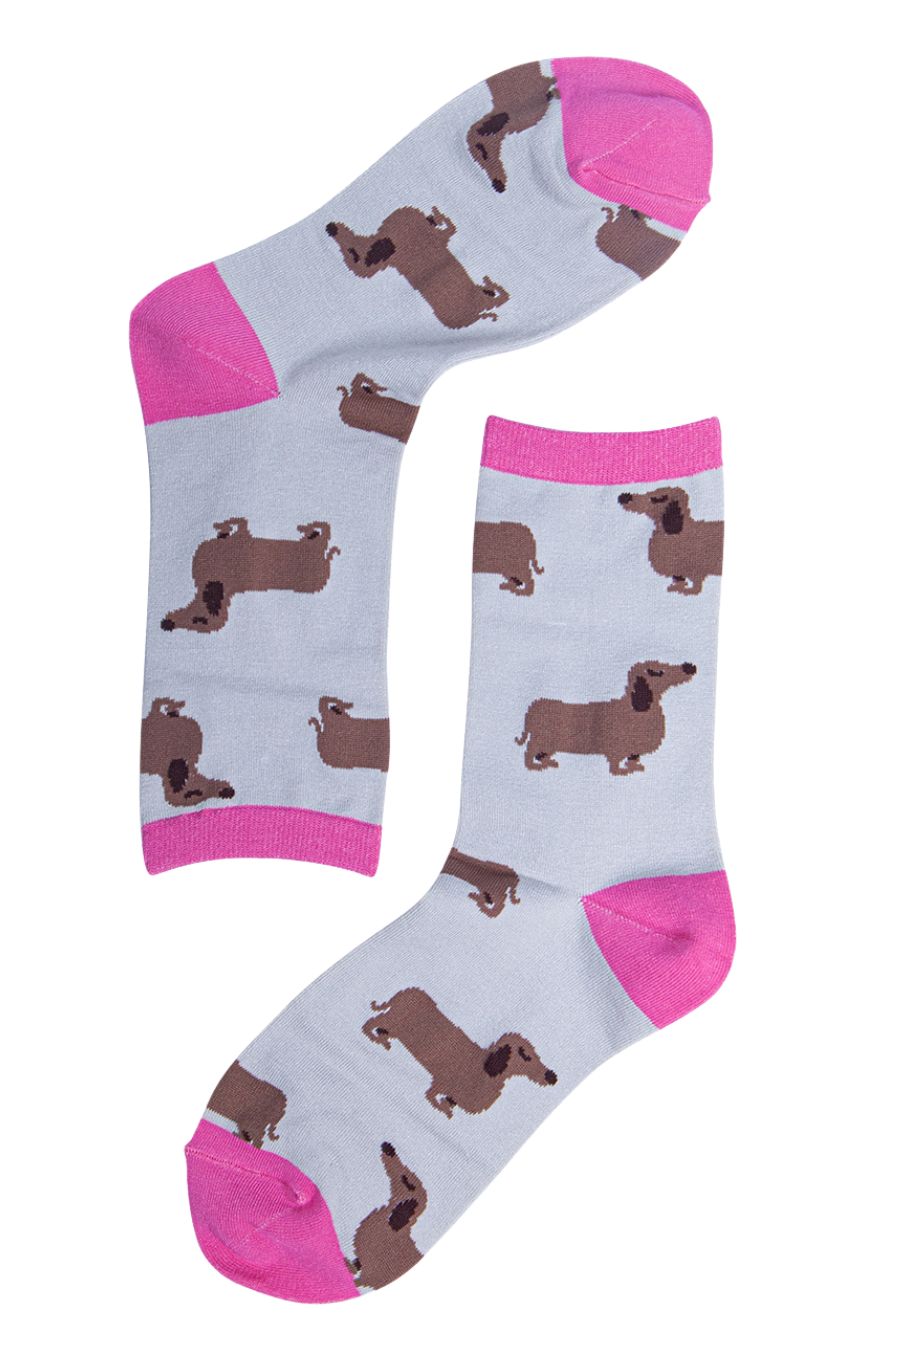 grey bamboo socks with an all over sausage dog print